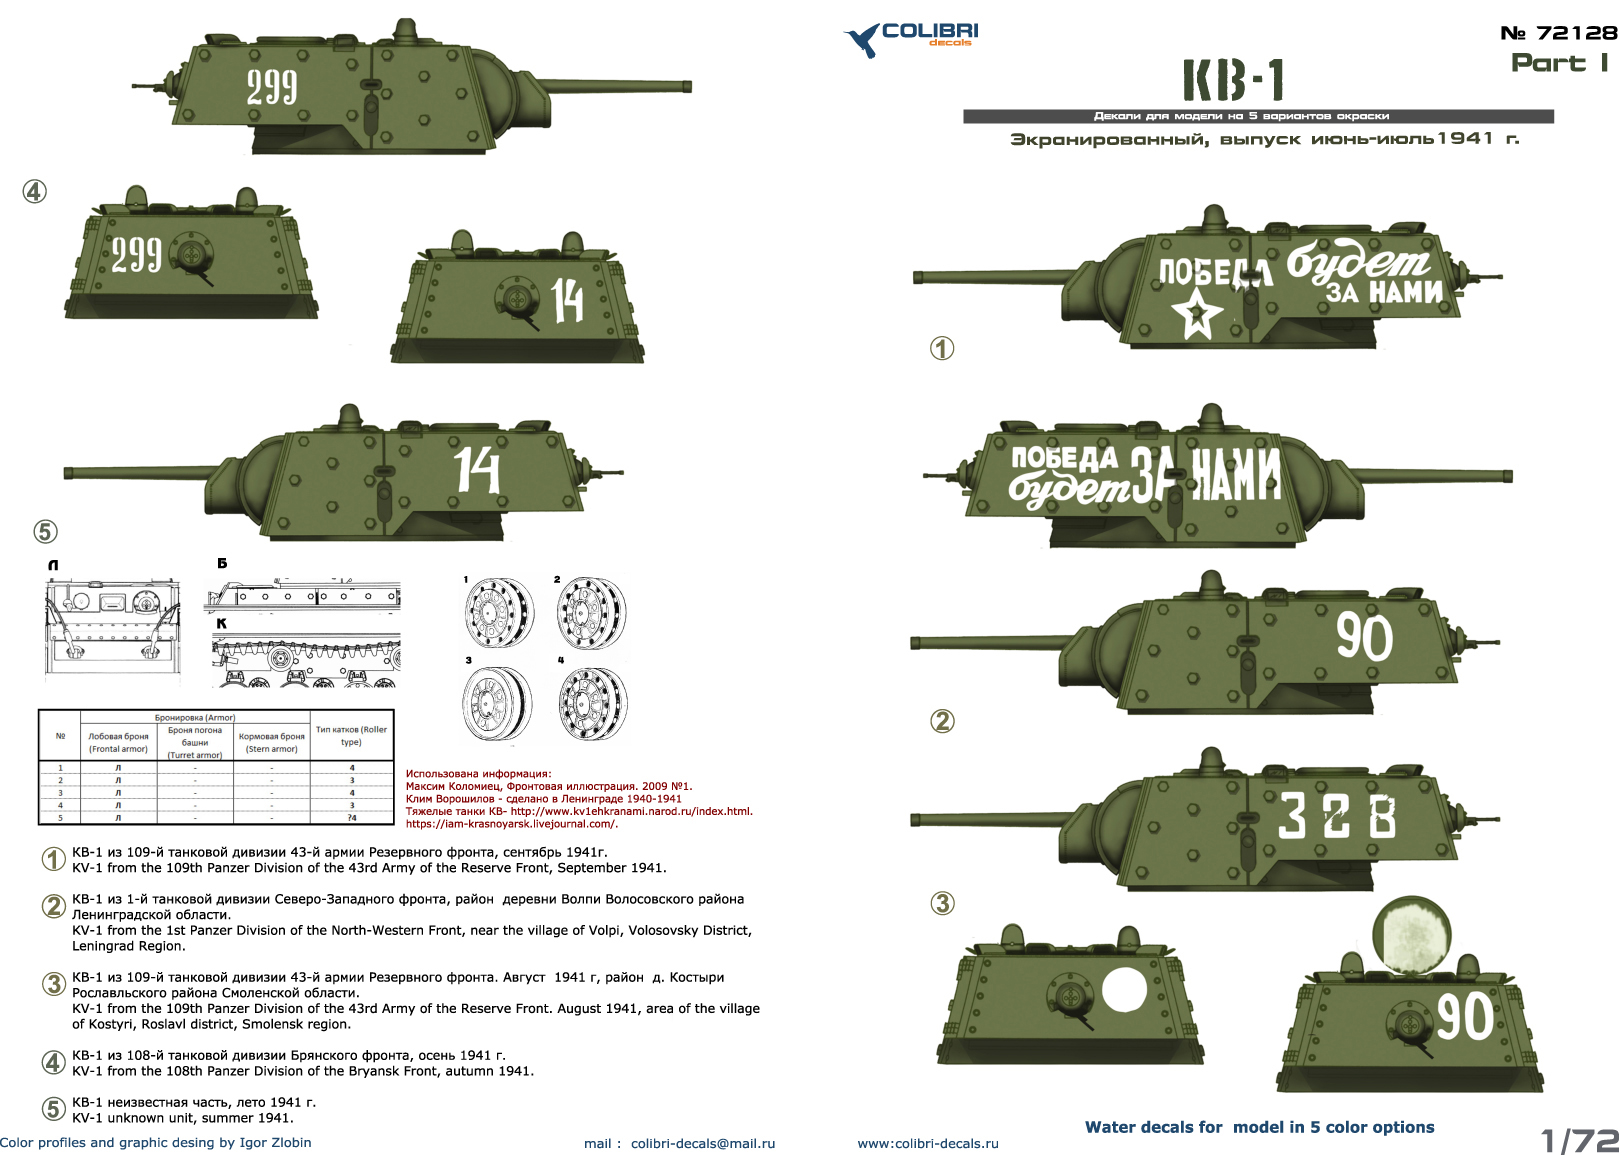 Decal 1/72 KV-1 (w/Applique Armor) Part I (Colibri Decals)